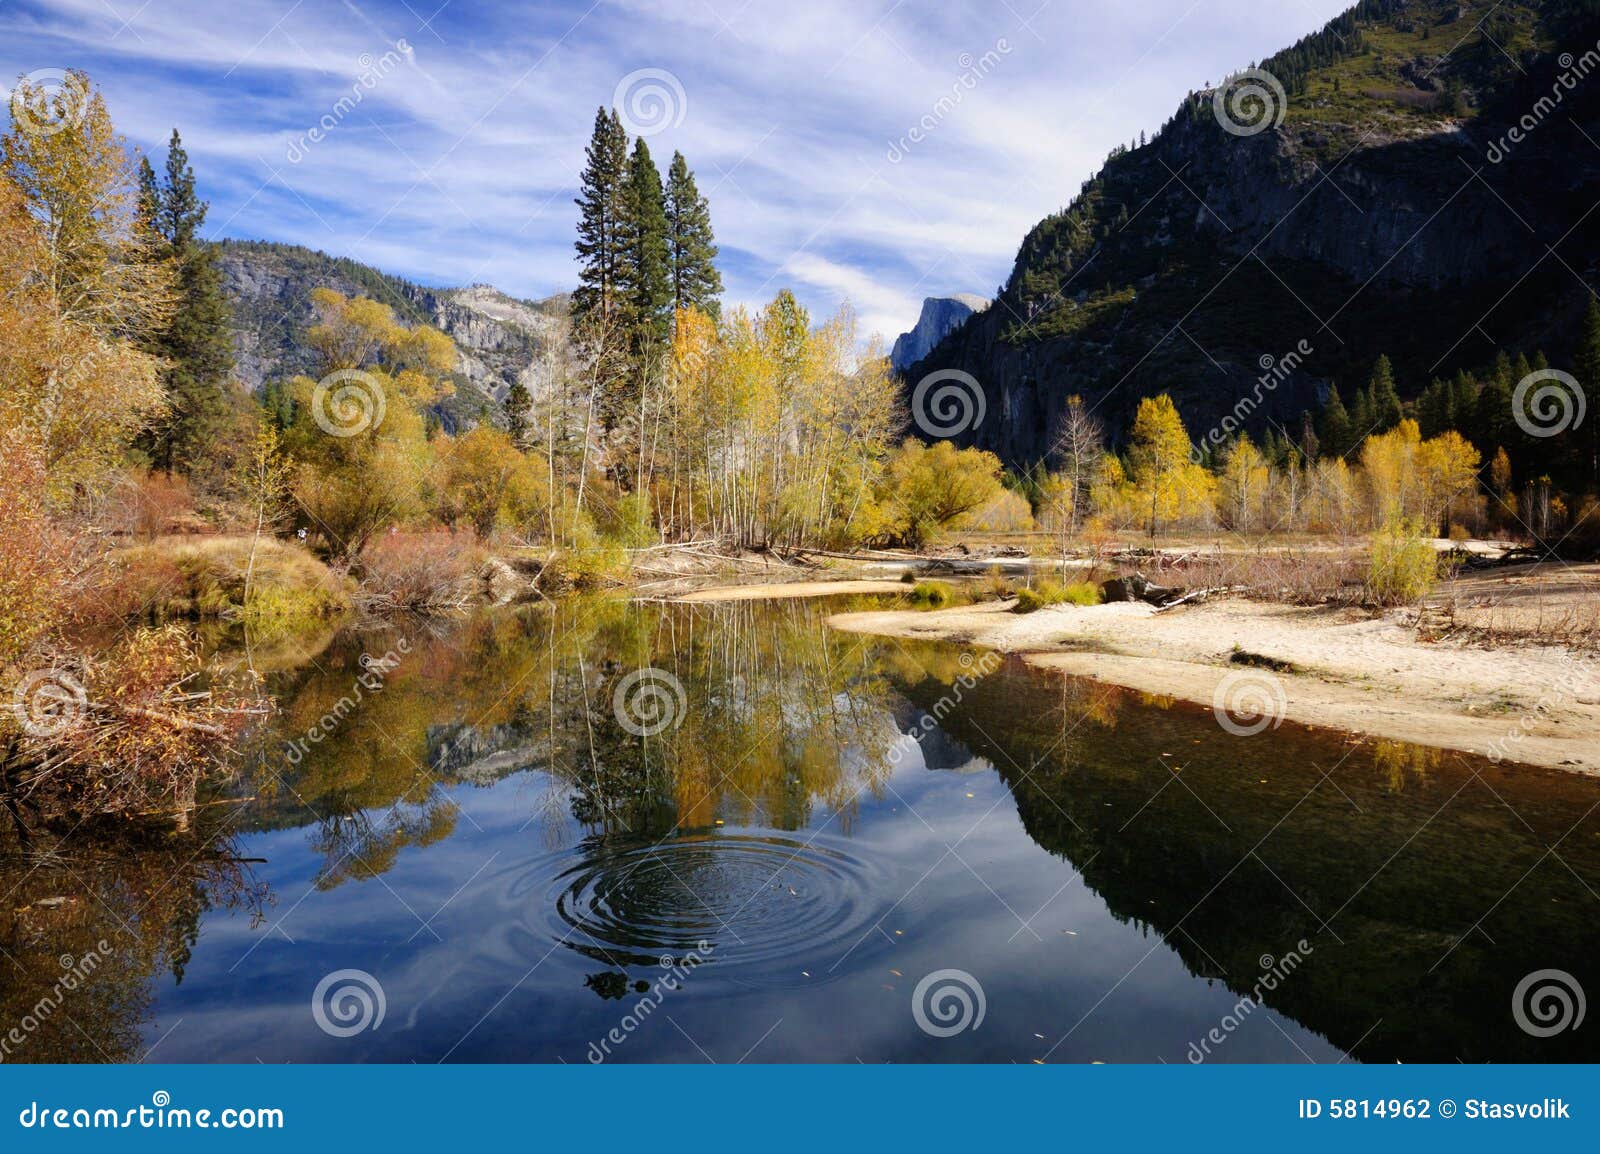 autumn in yosemite - merced river